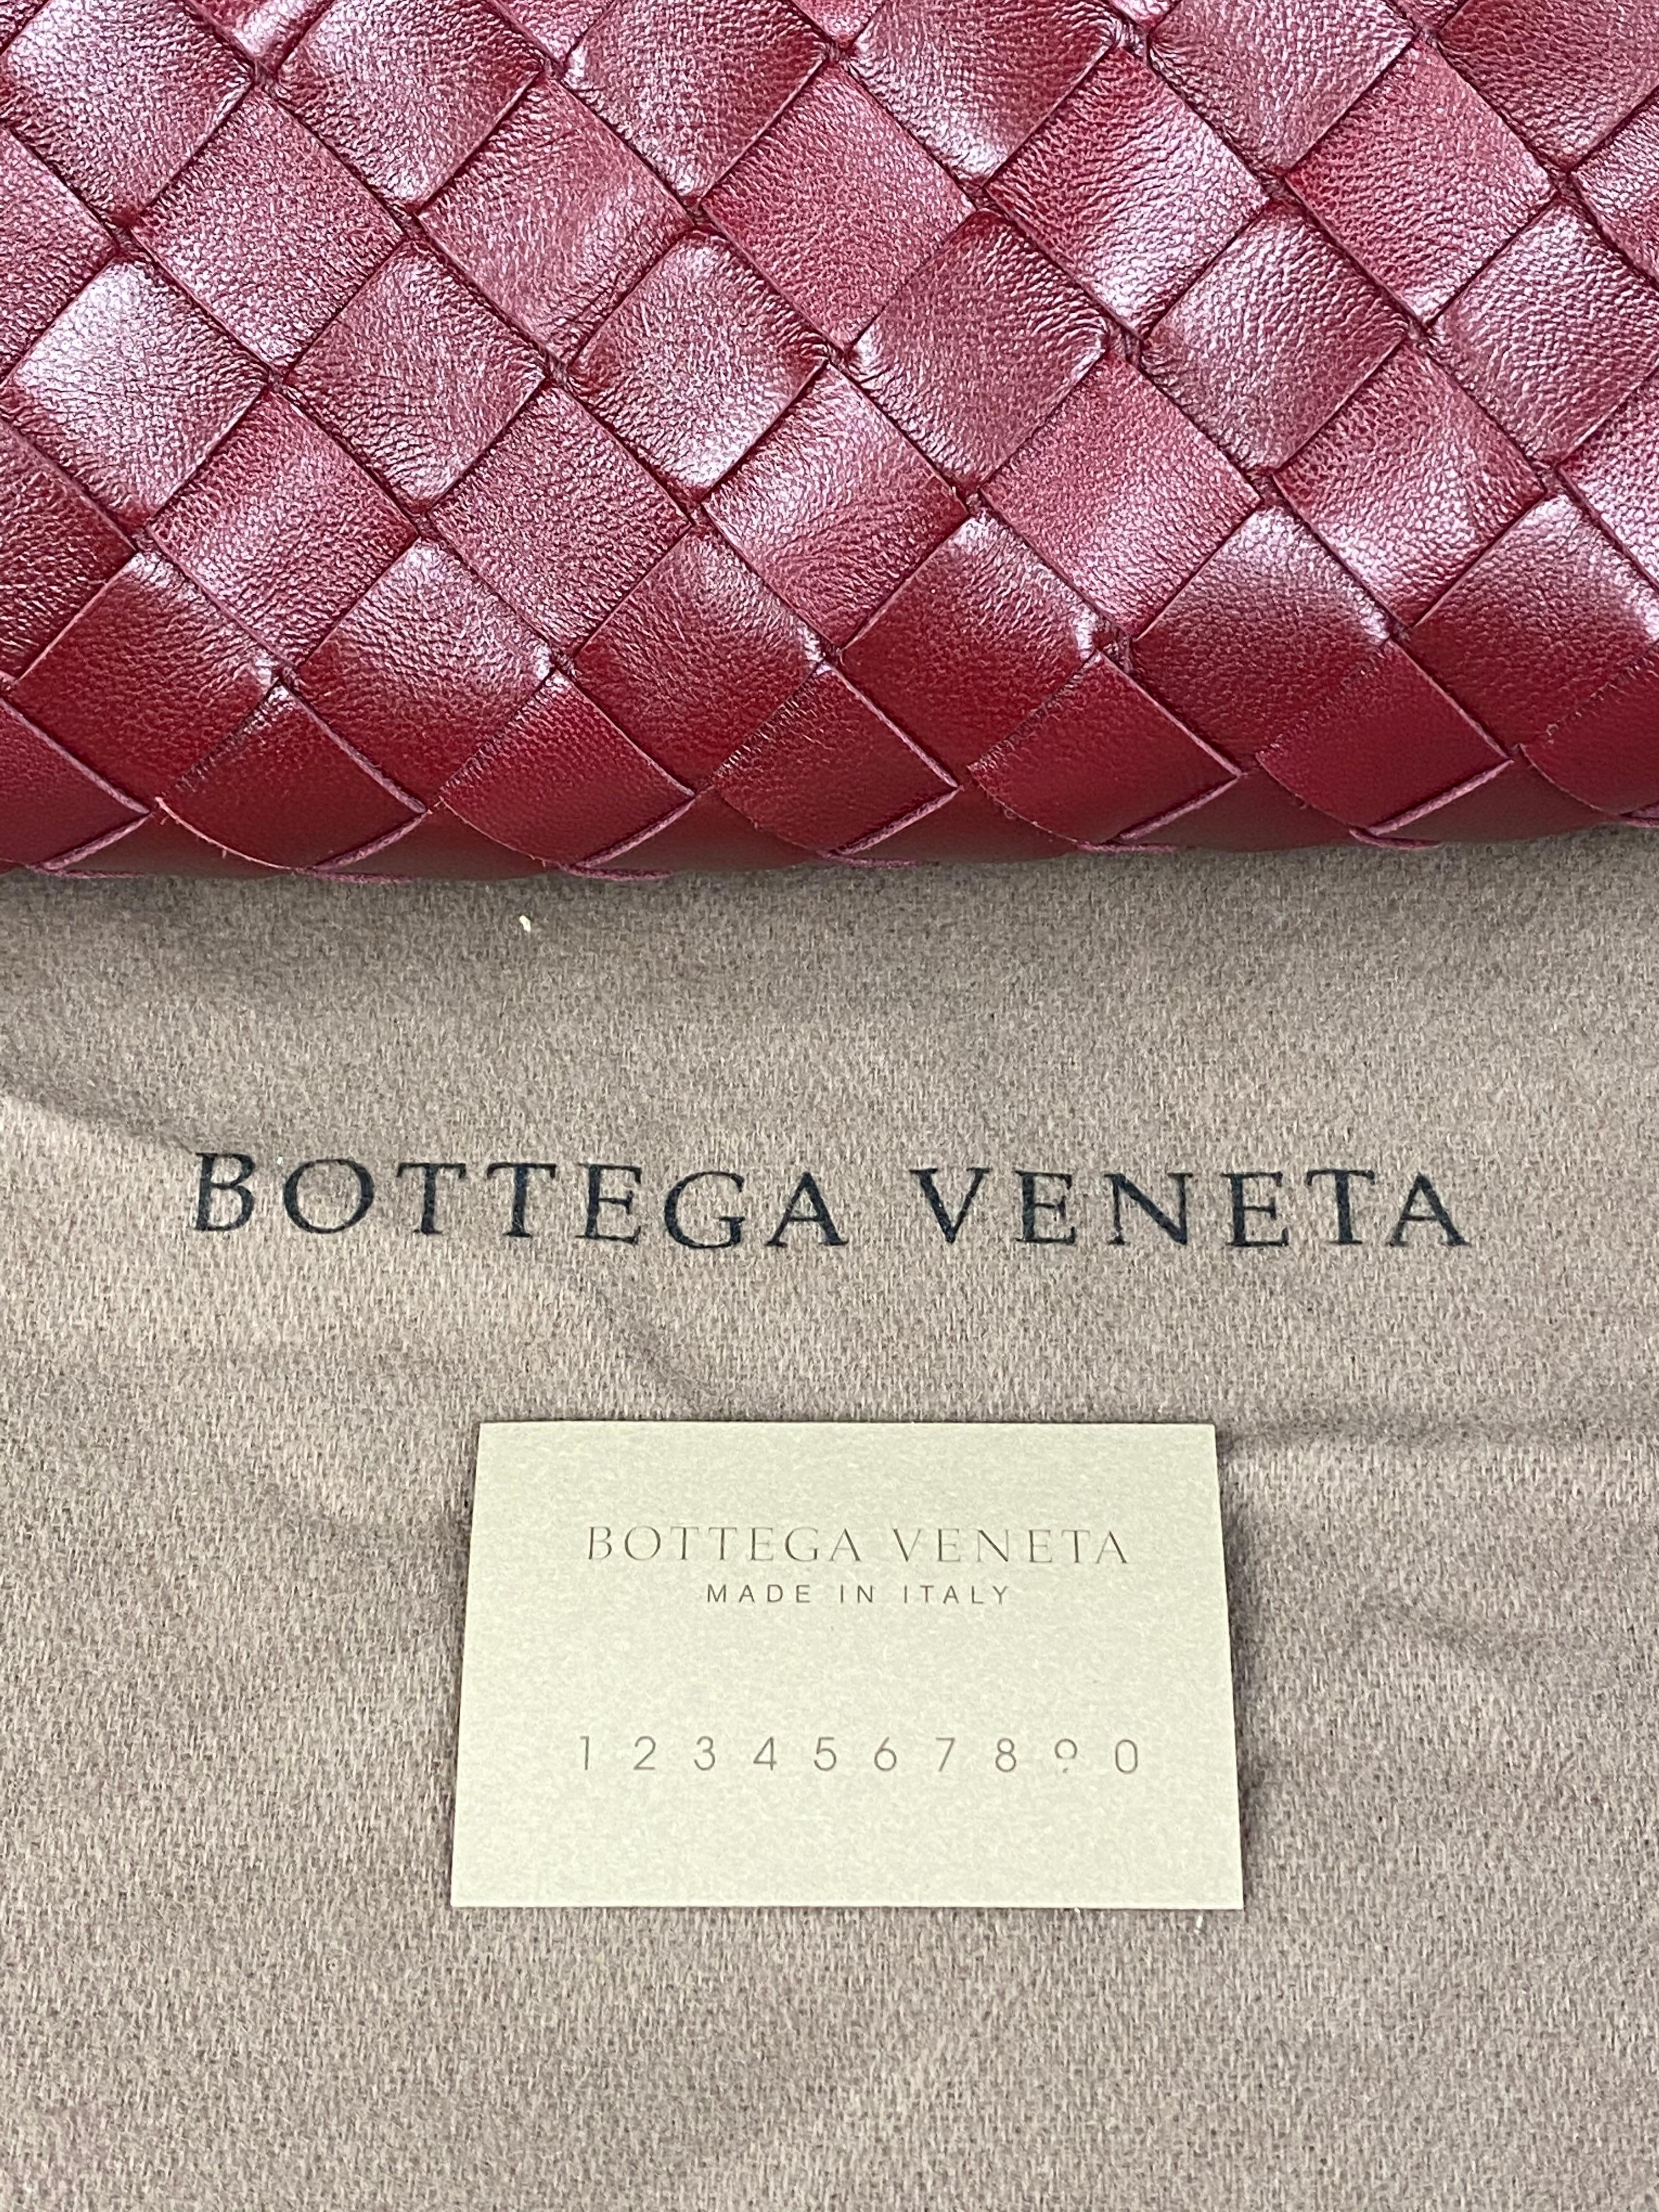 Bottega Veneta The Pouch Red Leather Clutch Purse Handbag  5